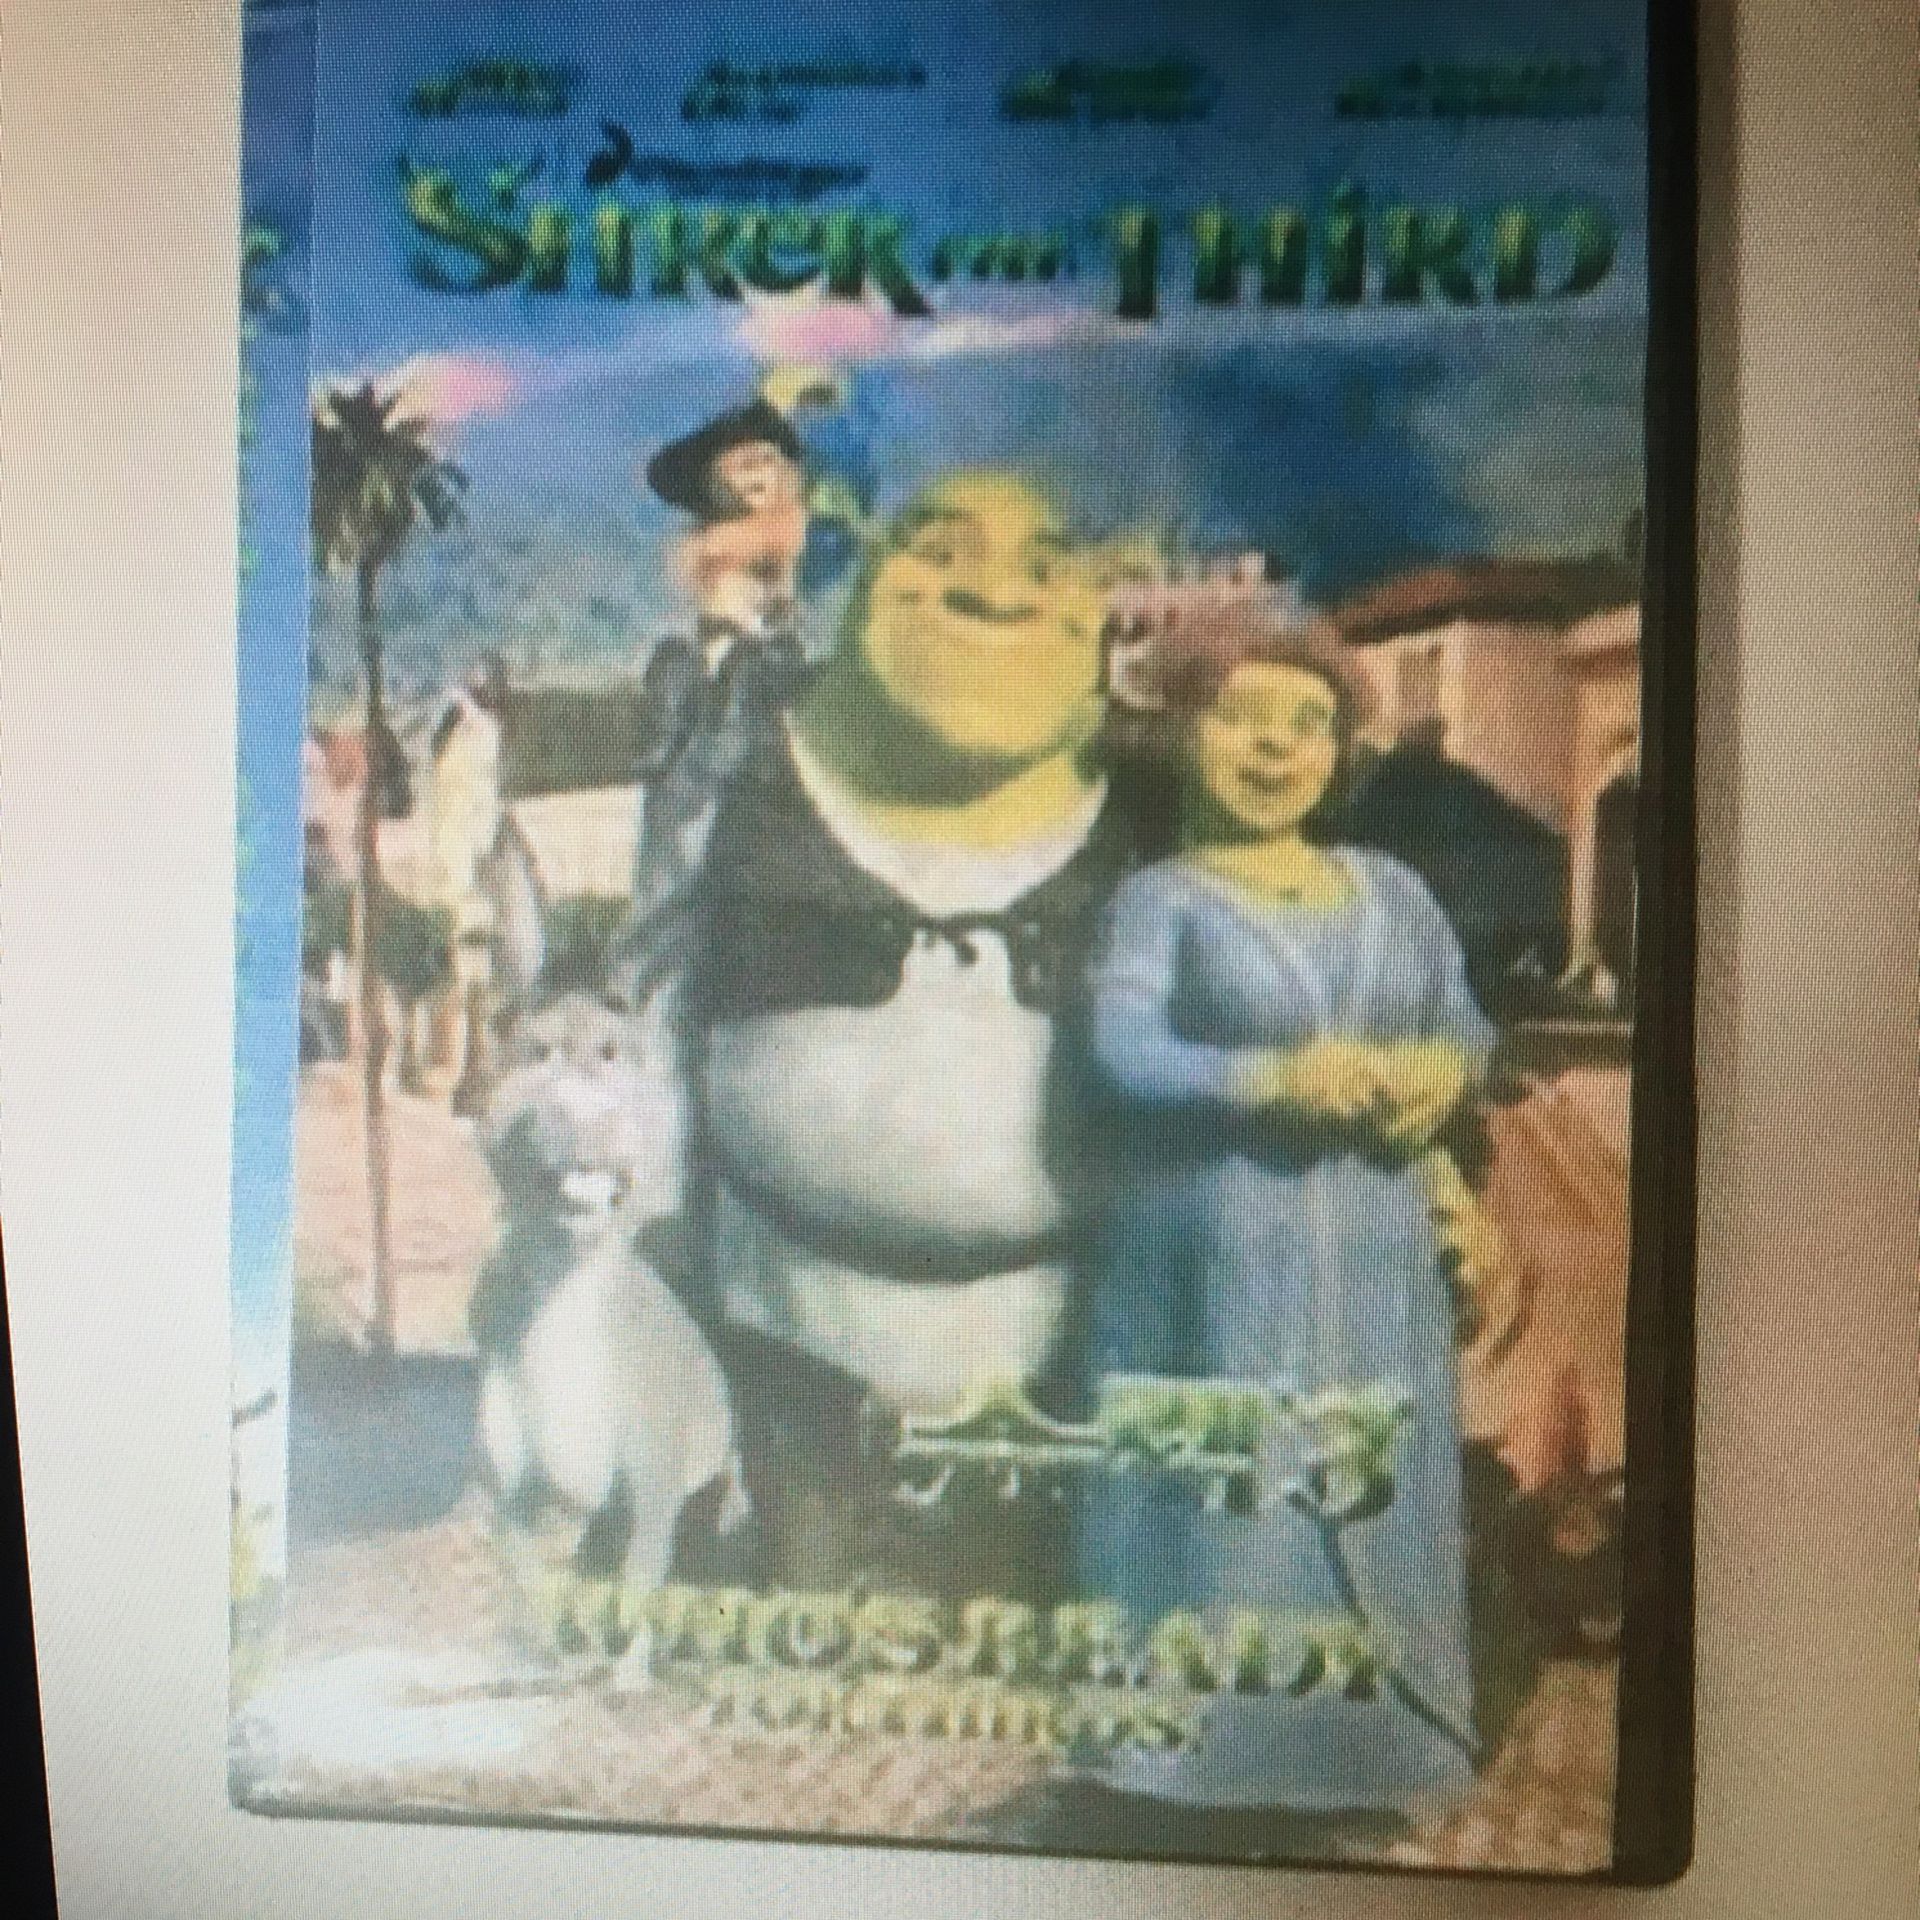 Lot of 5 Paramount DVD Movies (Shrek the Third, Star Trek, Transformers 2)